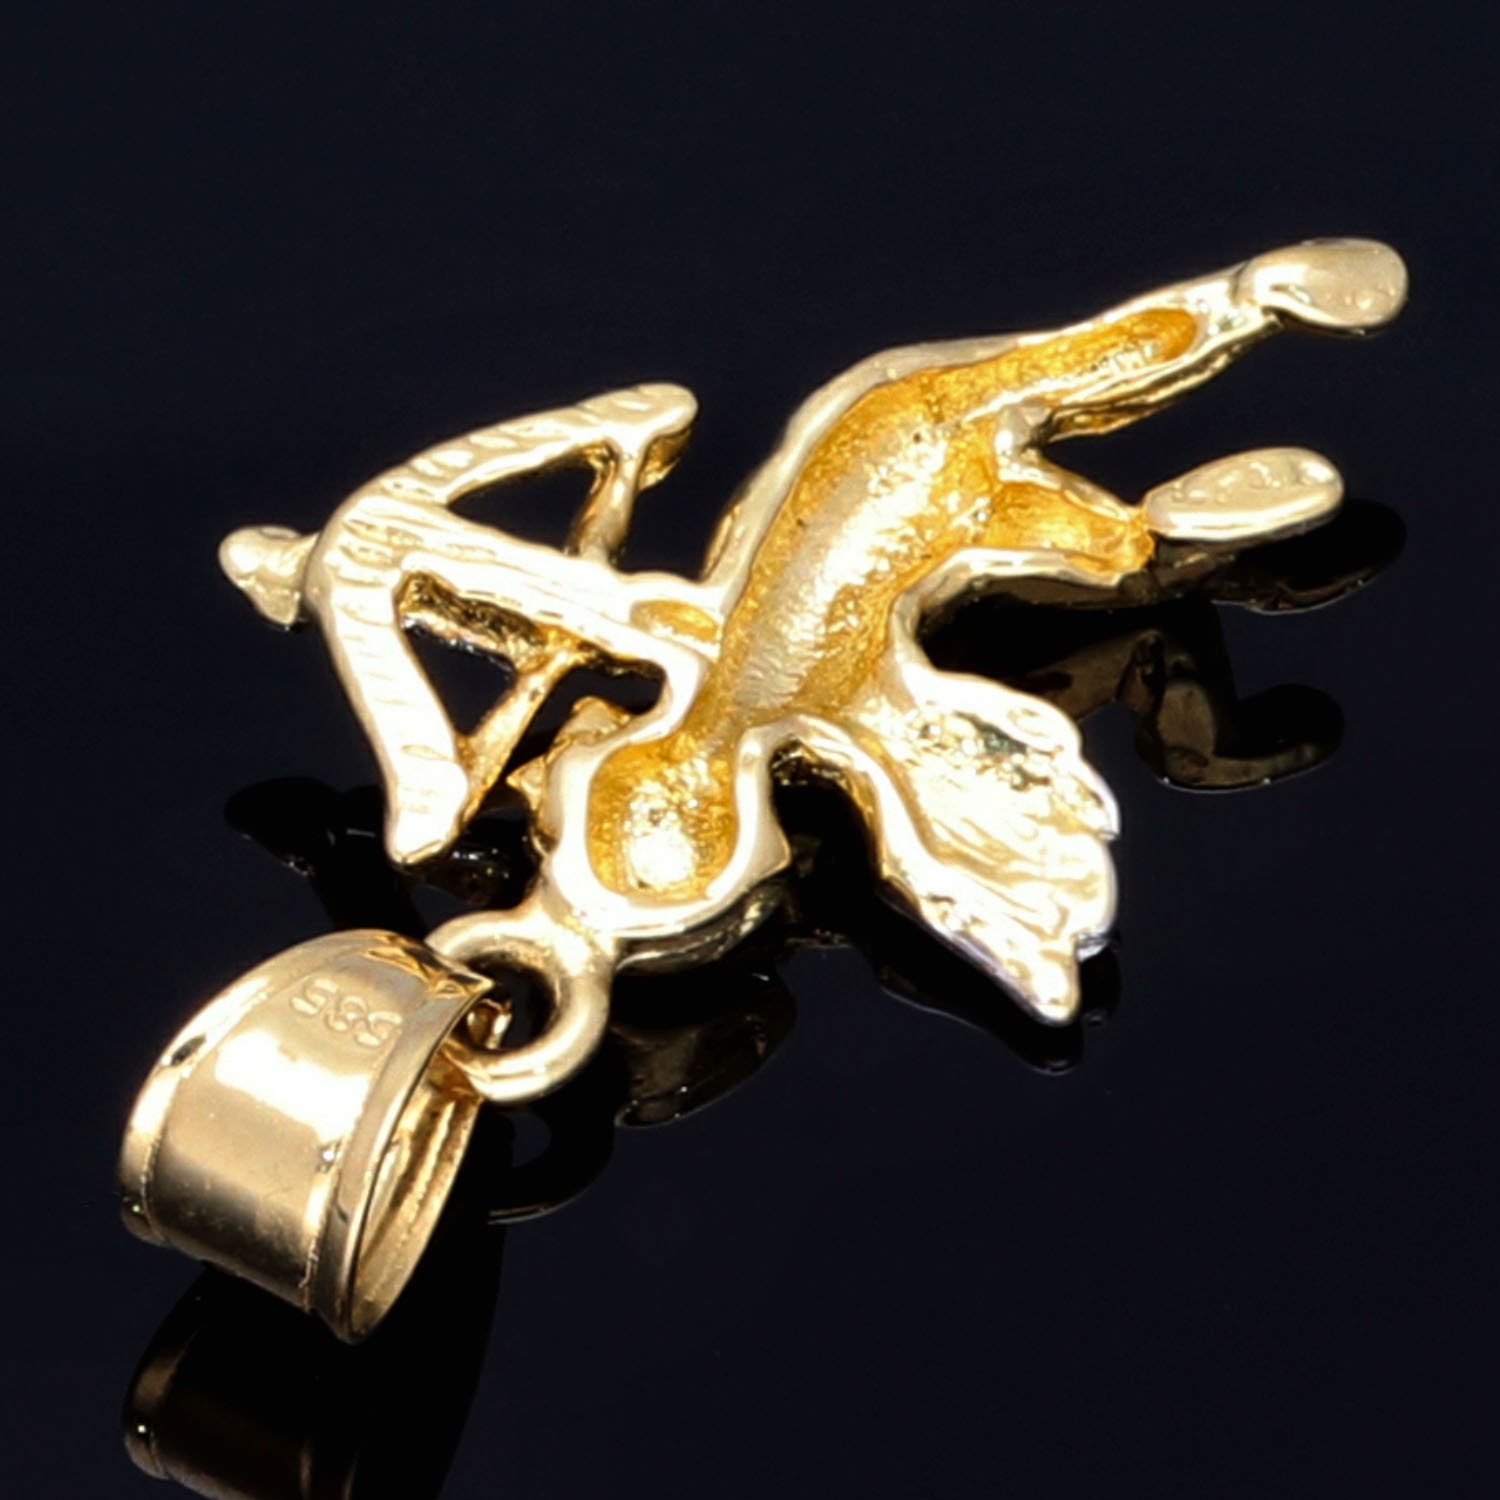 Amor - Engel - - (585er) sensburg-aurum Gold 14k (bicolor) aus Anhänger